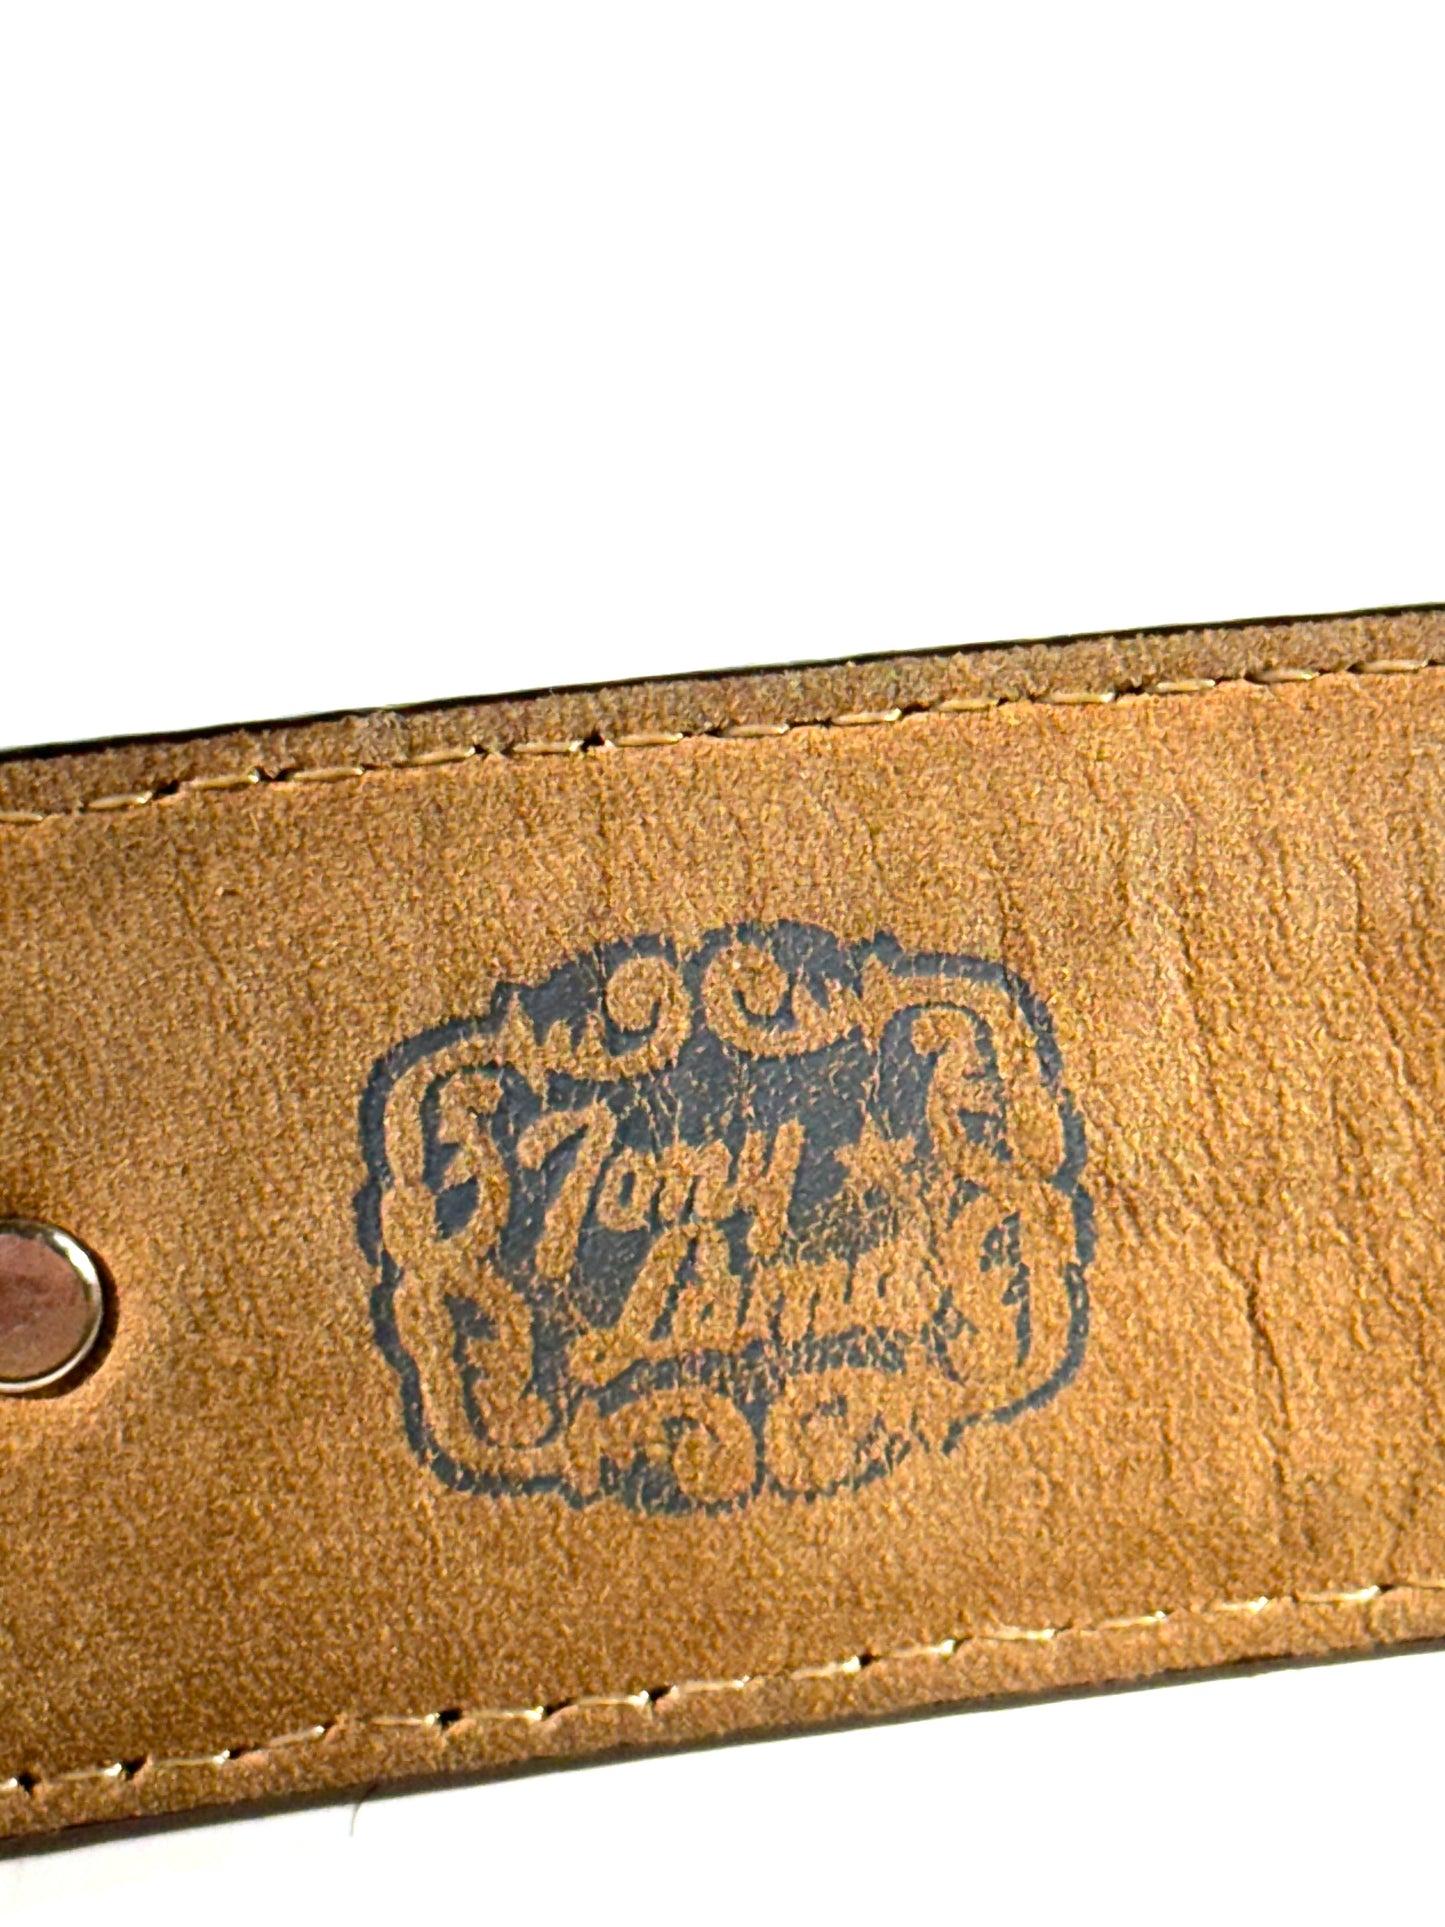 Vintage Western Leather Belt And Buckle Tony Lama Gorgeous